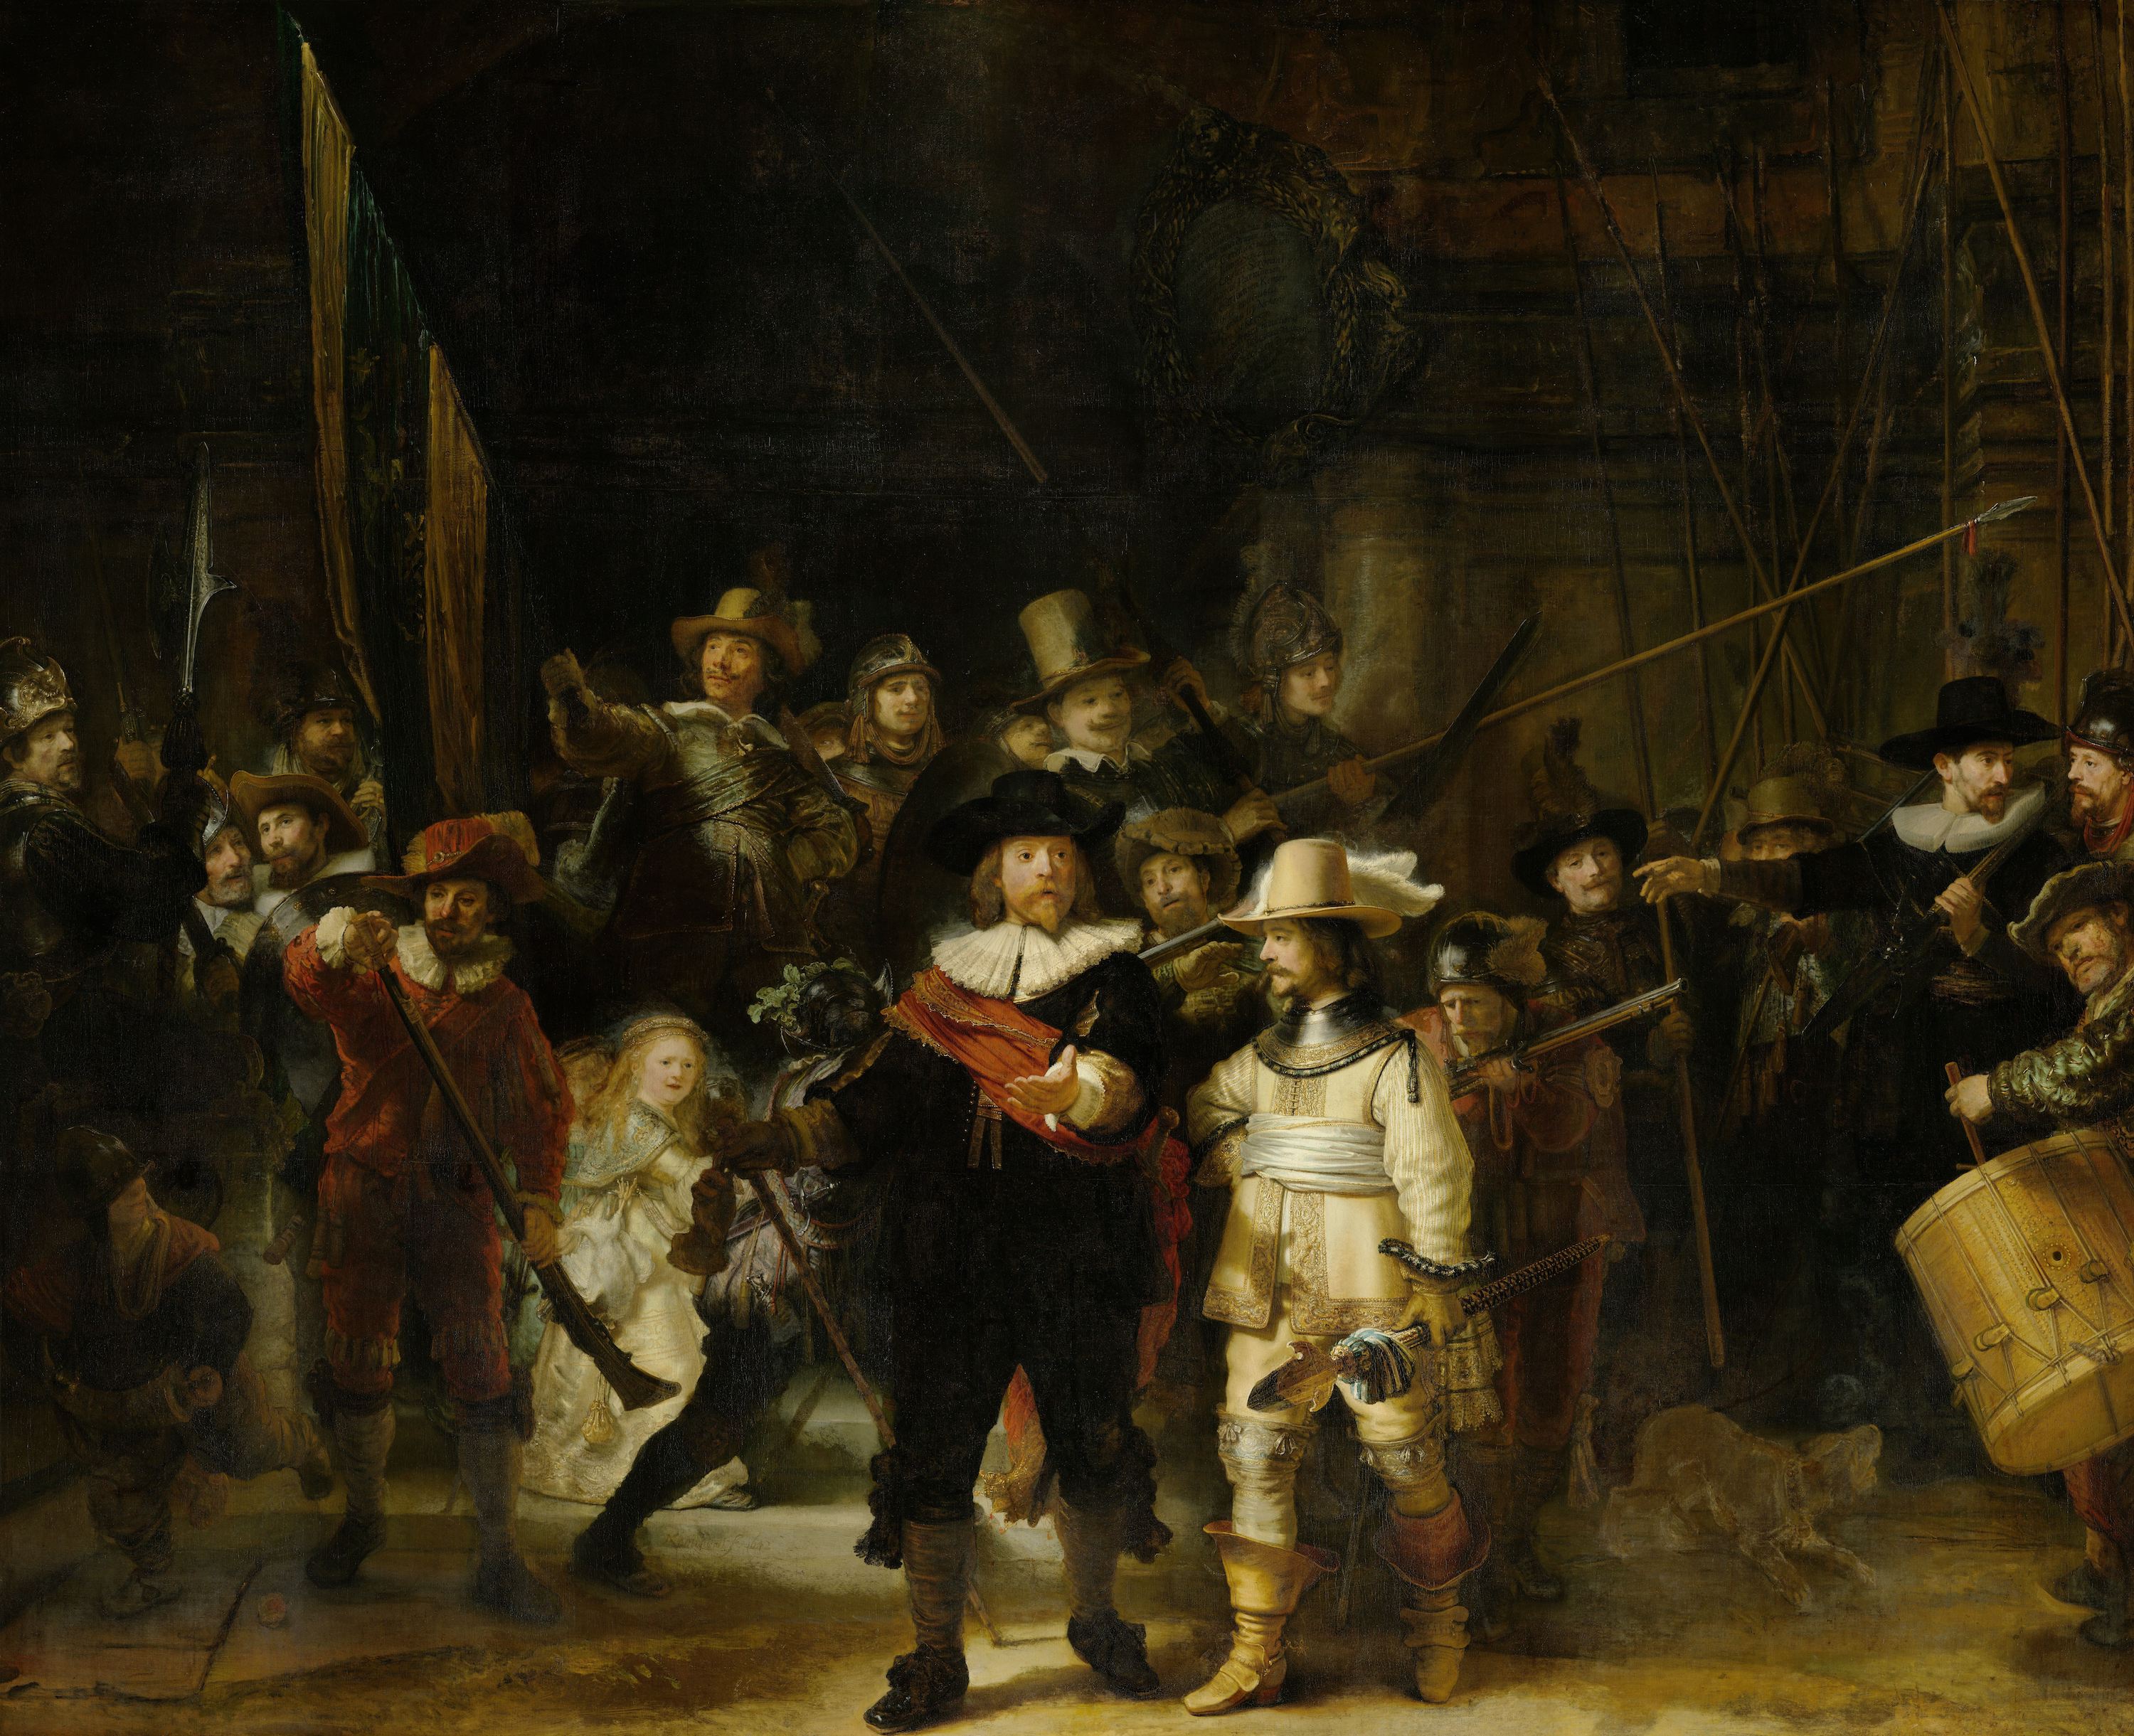 夜巡 by Rembrandt van Rijn - 1642 - 363 × 437 cm 